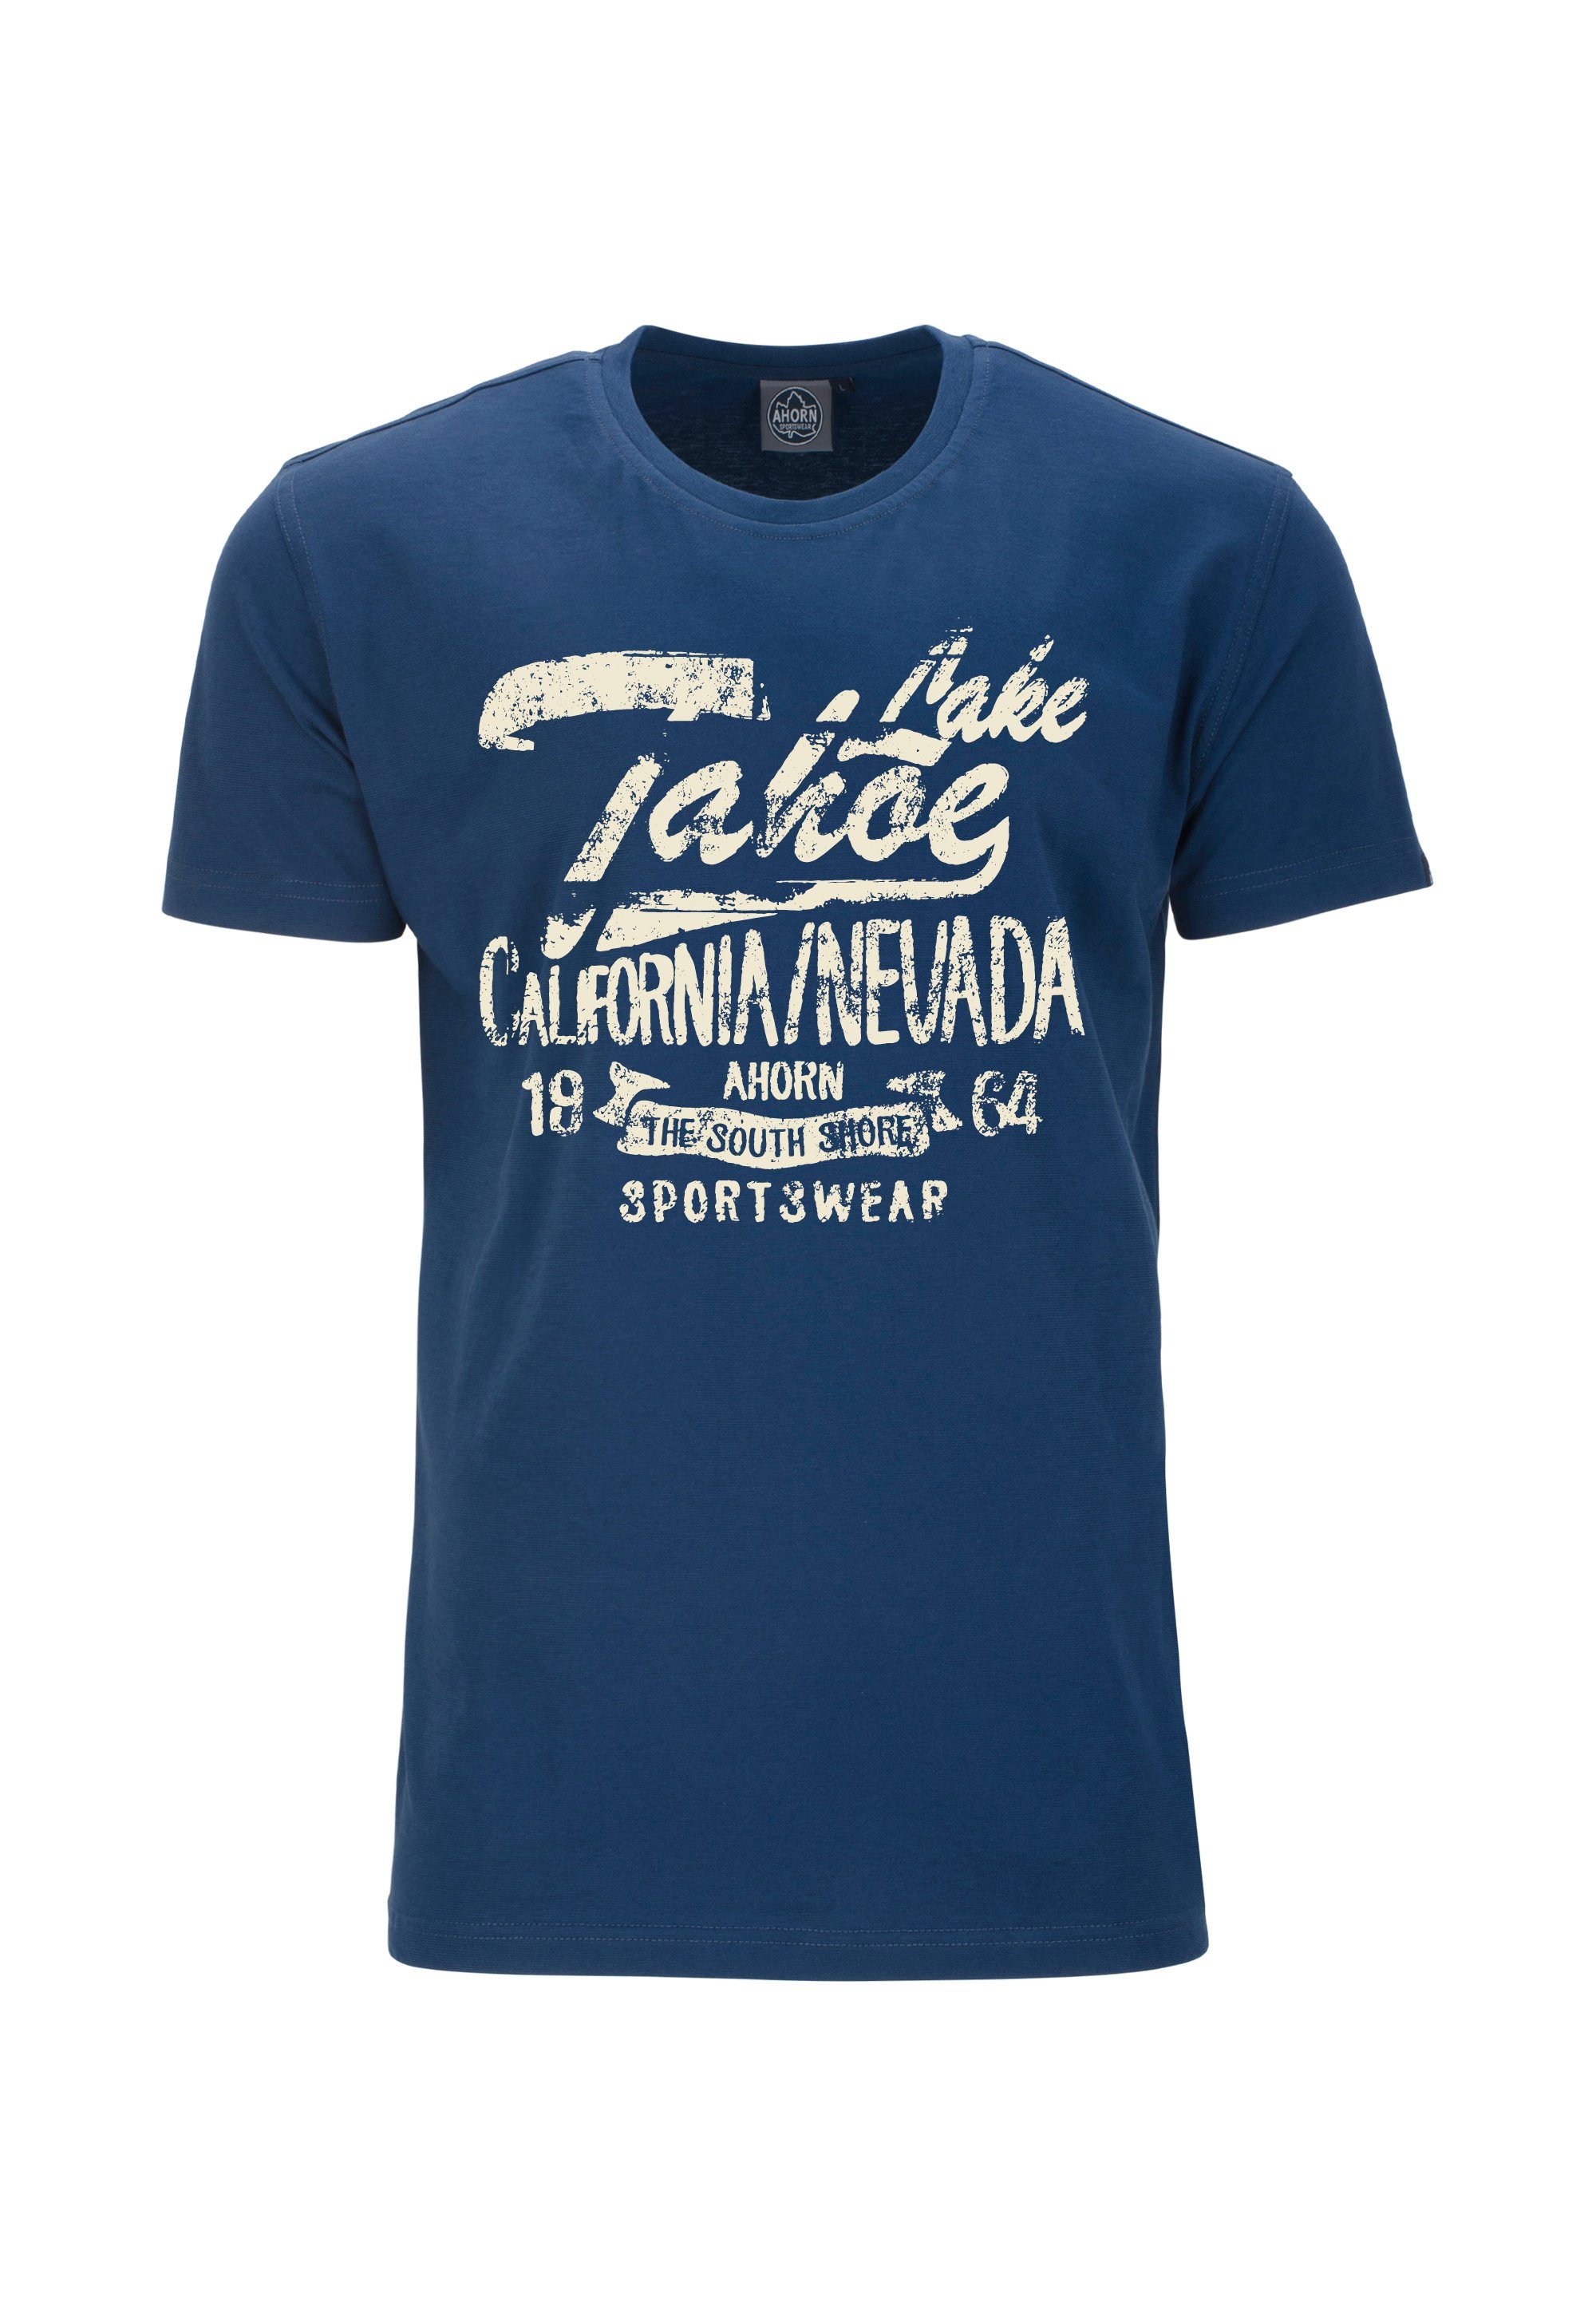 Frontprint SPORTSWEAR TAHOE_EGGSHELL AHORN mit LAKE blau modischem T-Shirt